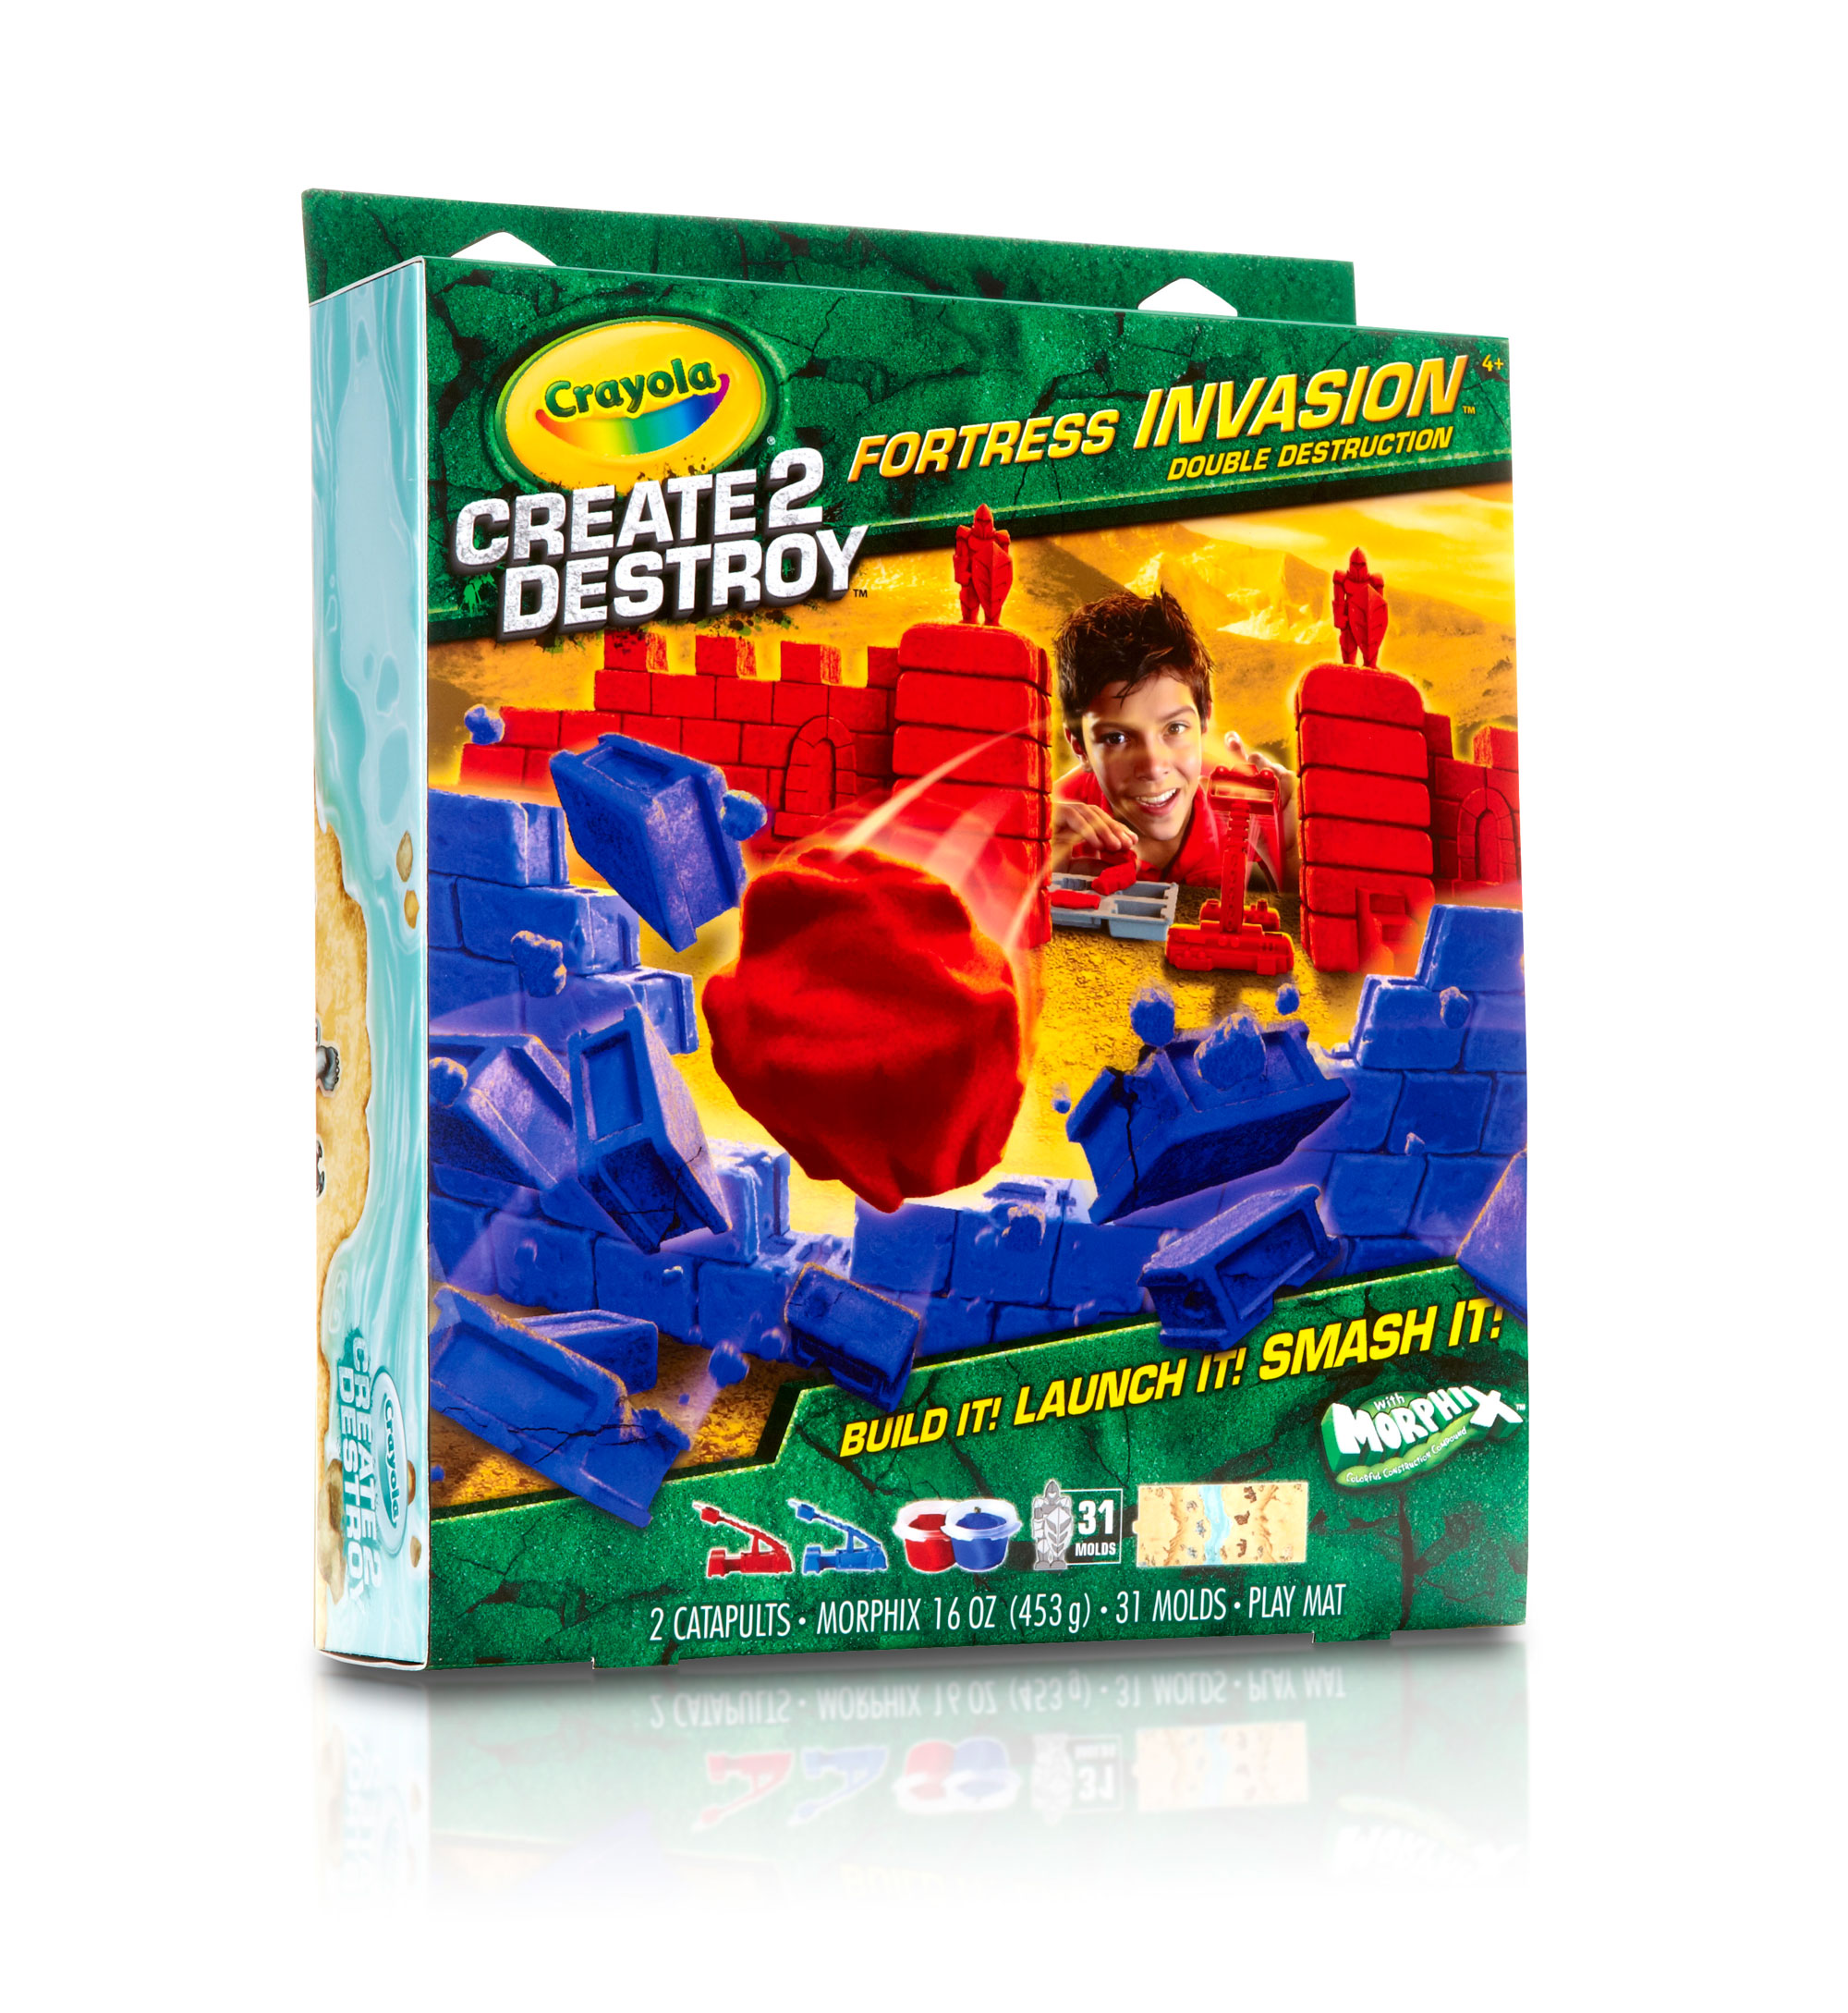 Download Create2Destroy Fortress Invasion Double Destruction | Crayola.com | Crayola